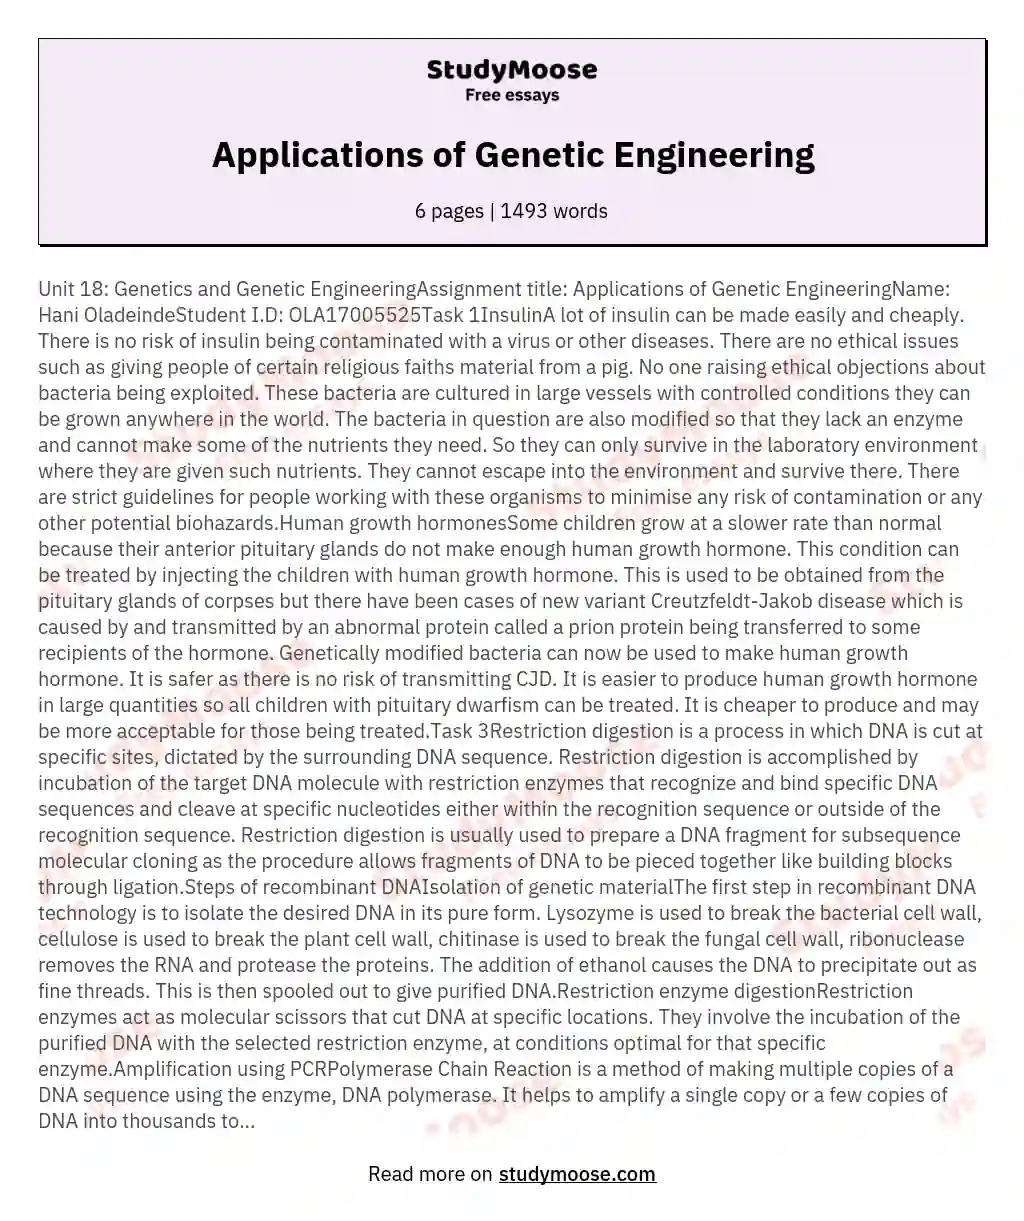 Applications of Genetic Engineering essay